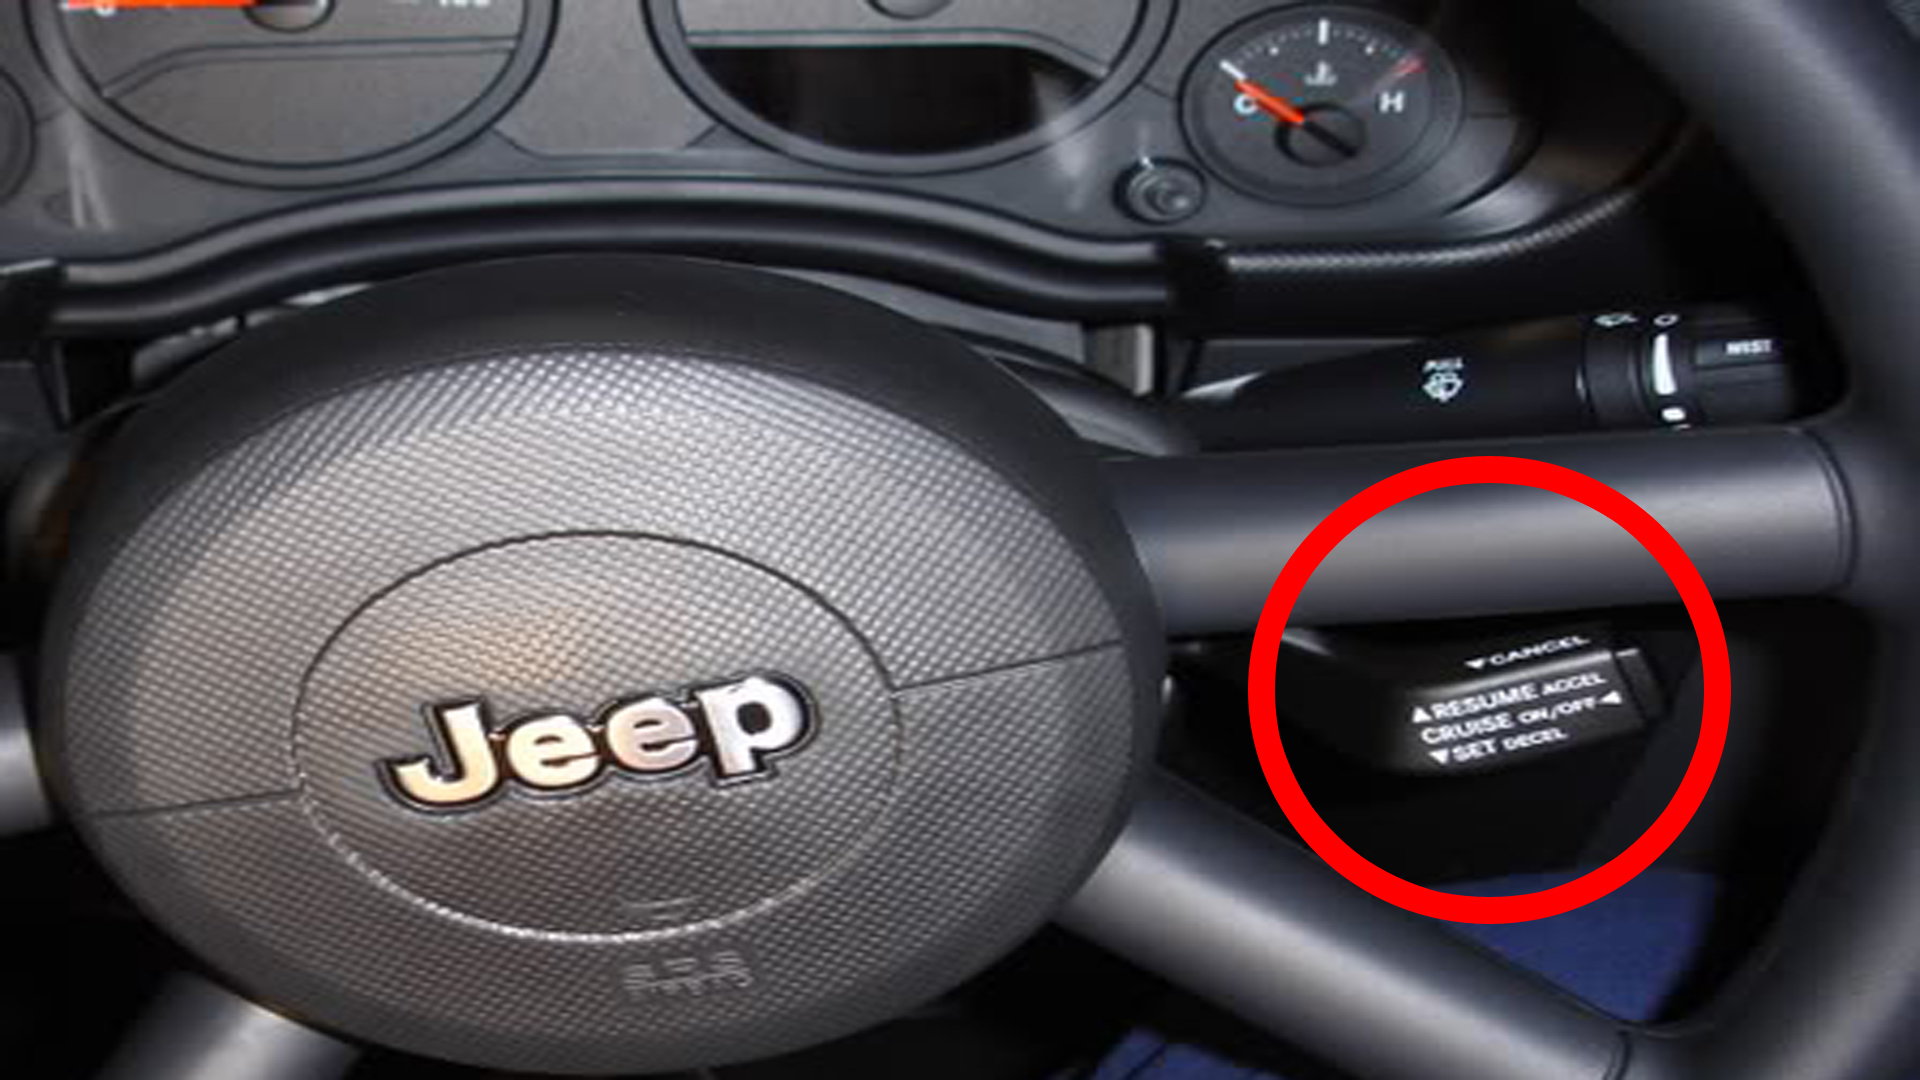 Jeep Wrangler JK: How to Install Cruise Control | Jk-forum